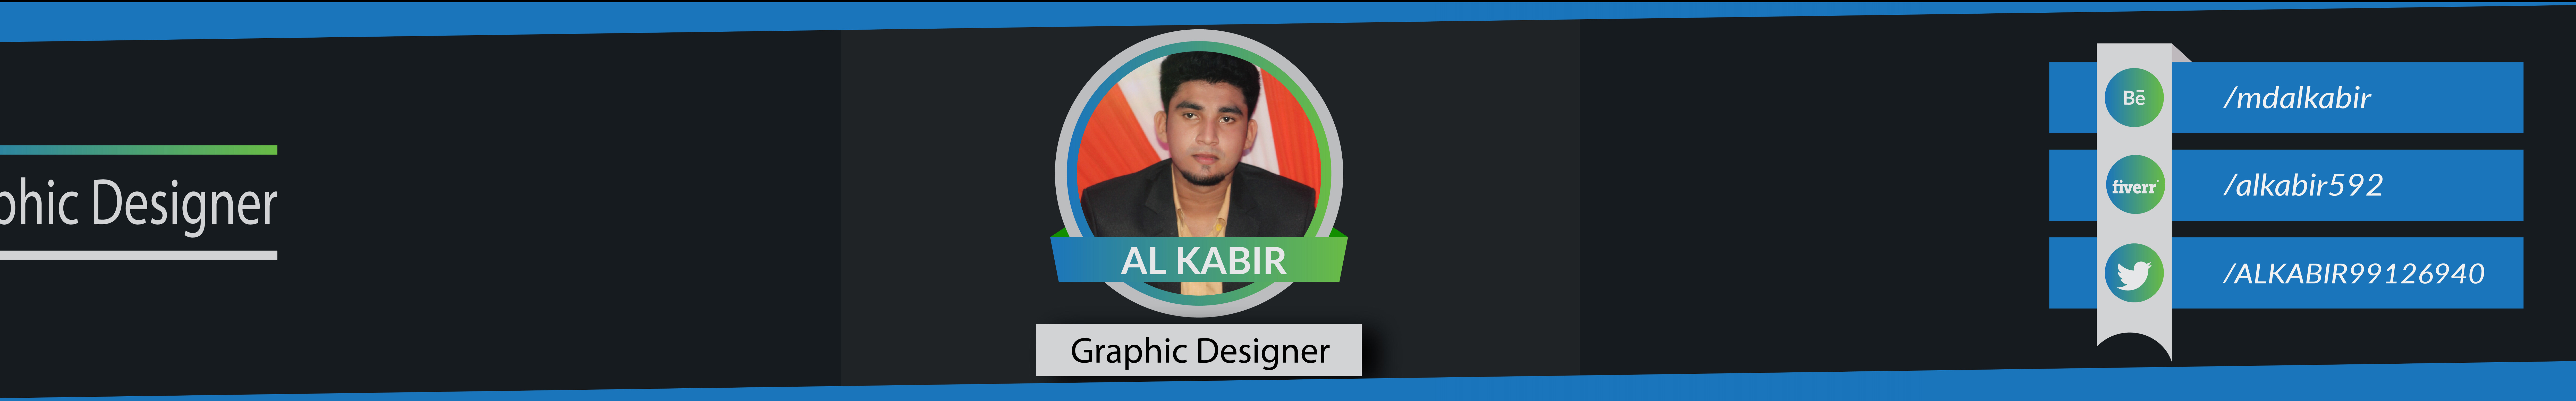 AL KABIR's profile banner